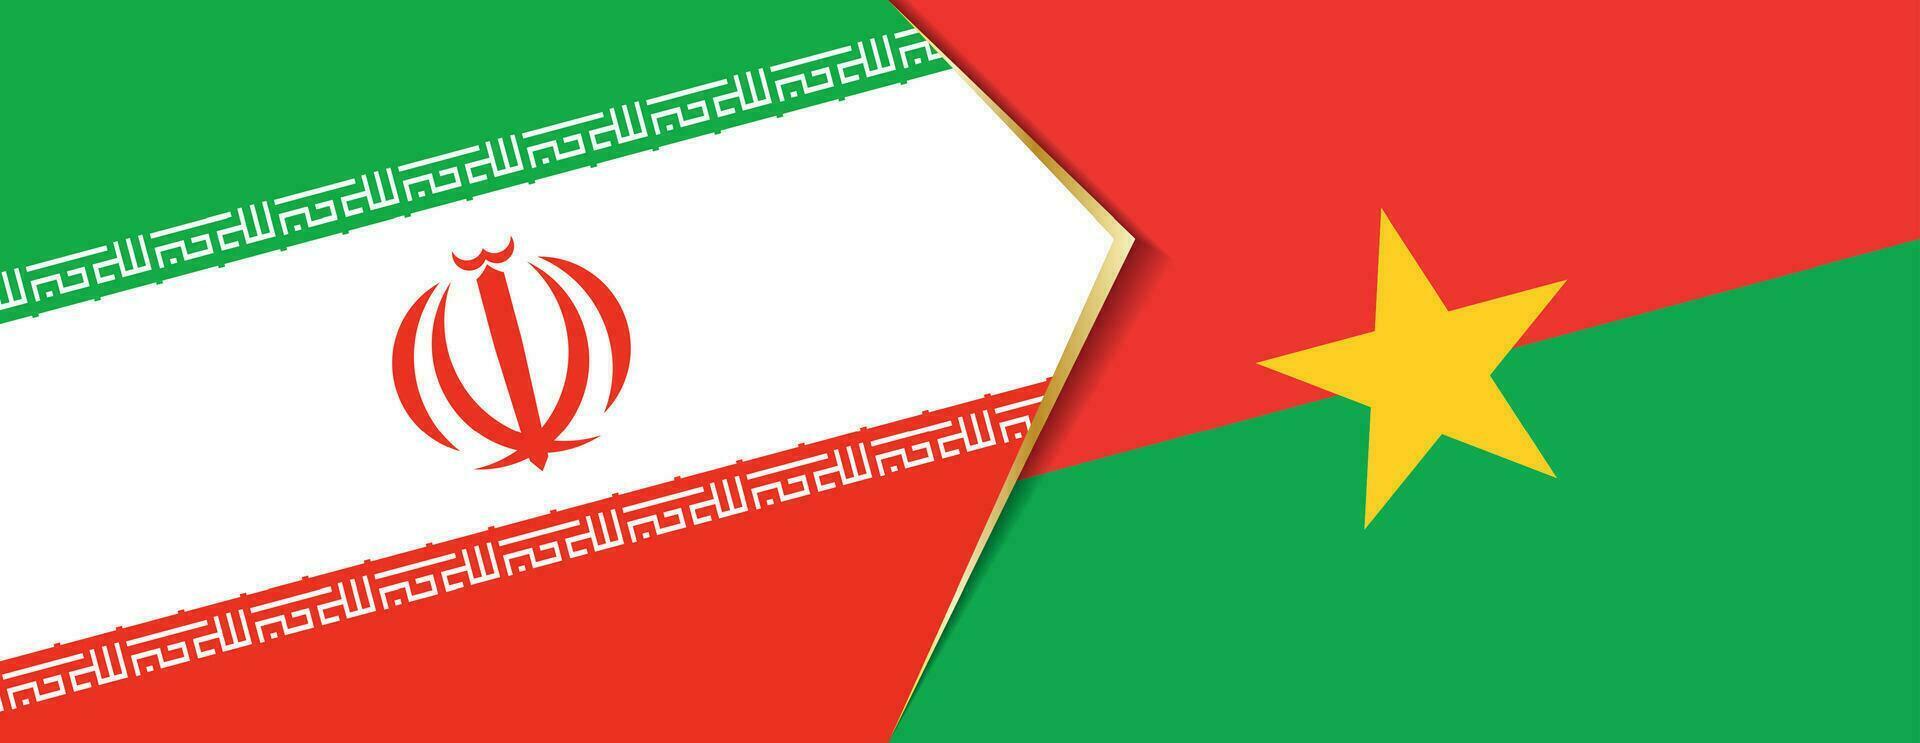 ik rende en Burkina faso vlaggen, twee vector vlaggen.